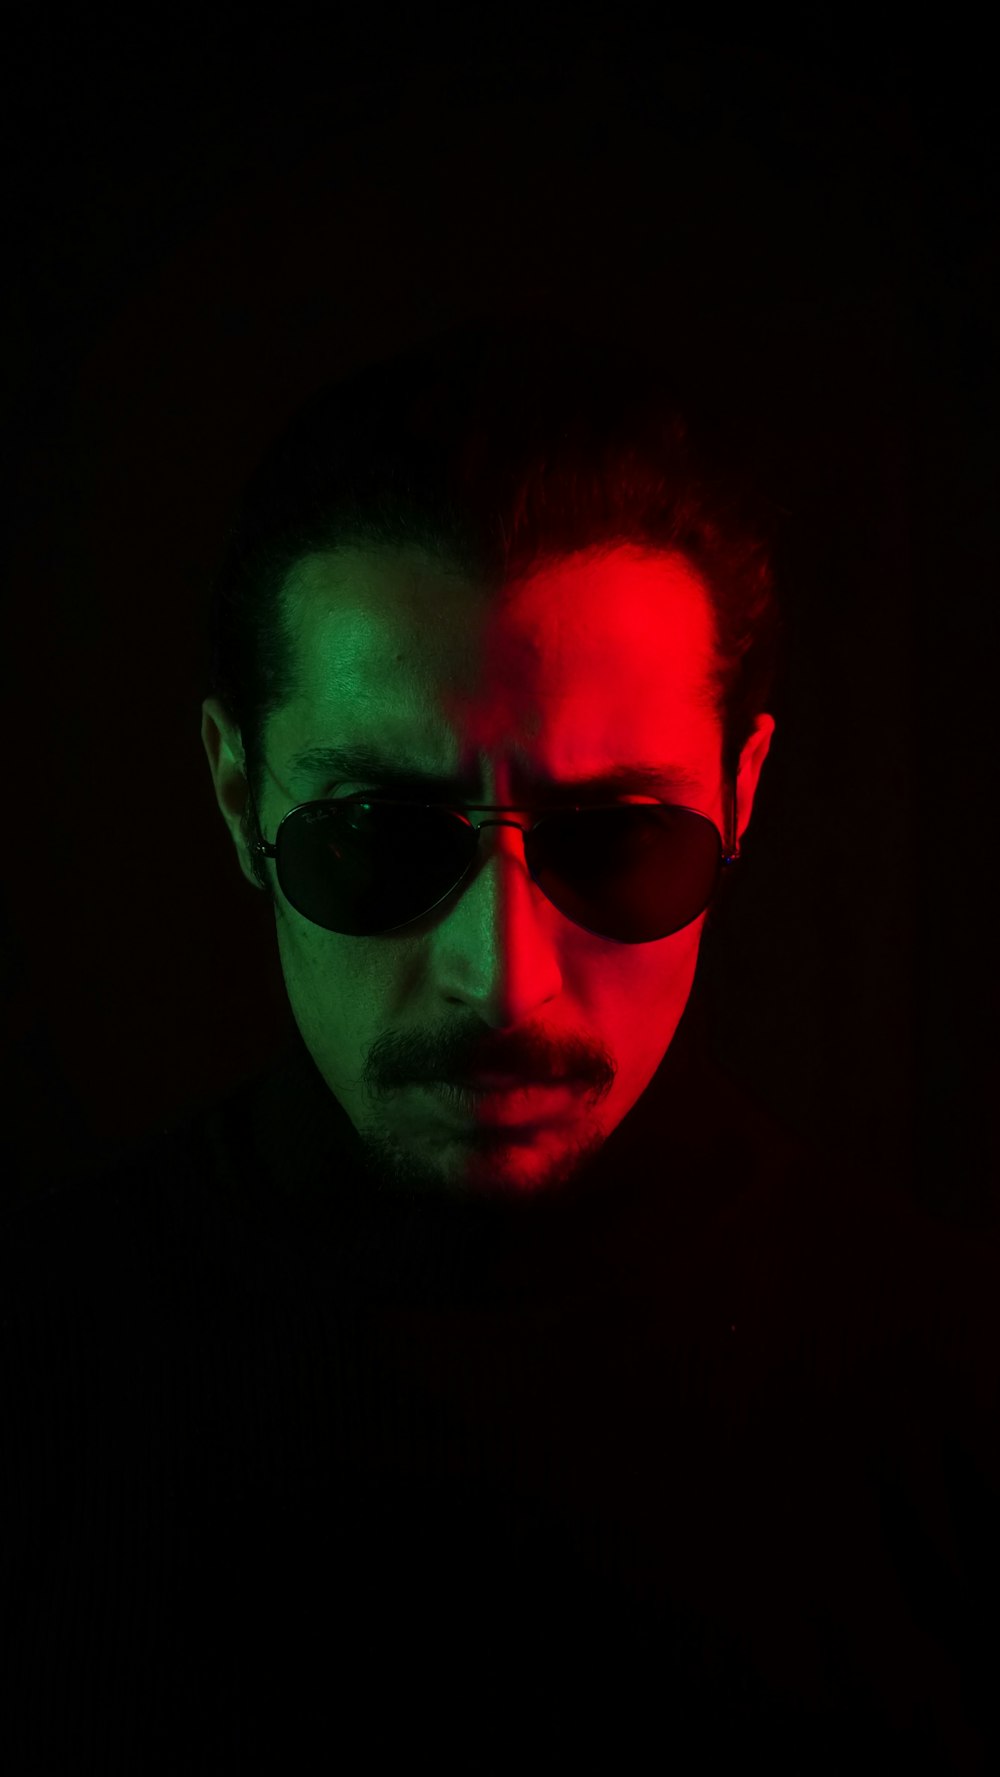 a man wearing sunglasses in a dark room